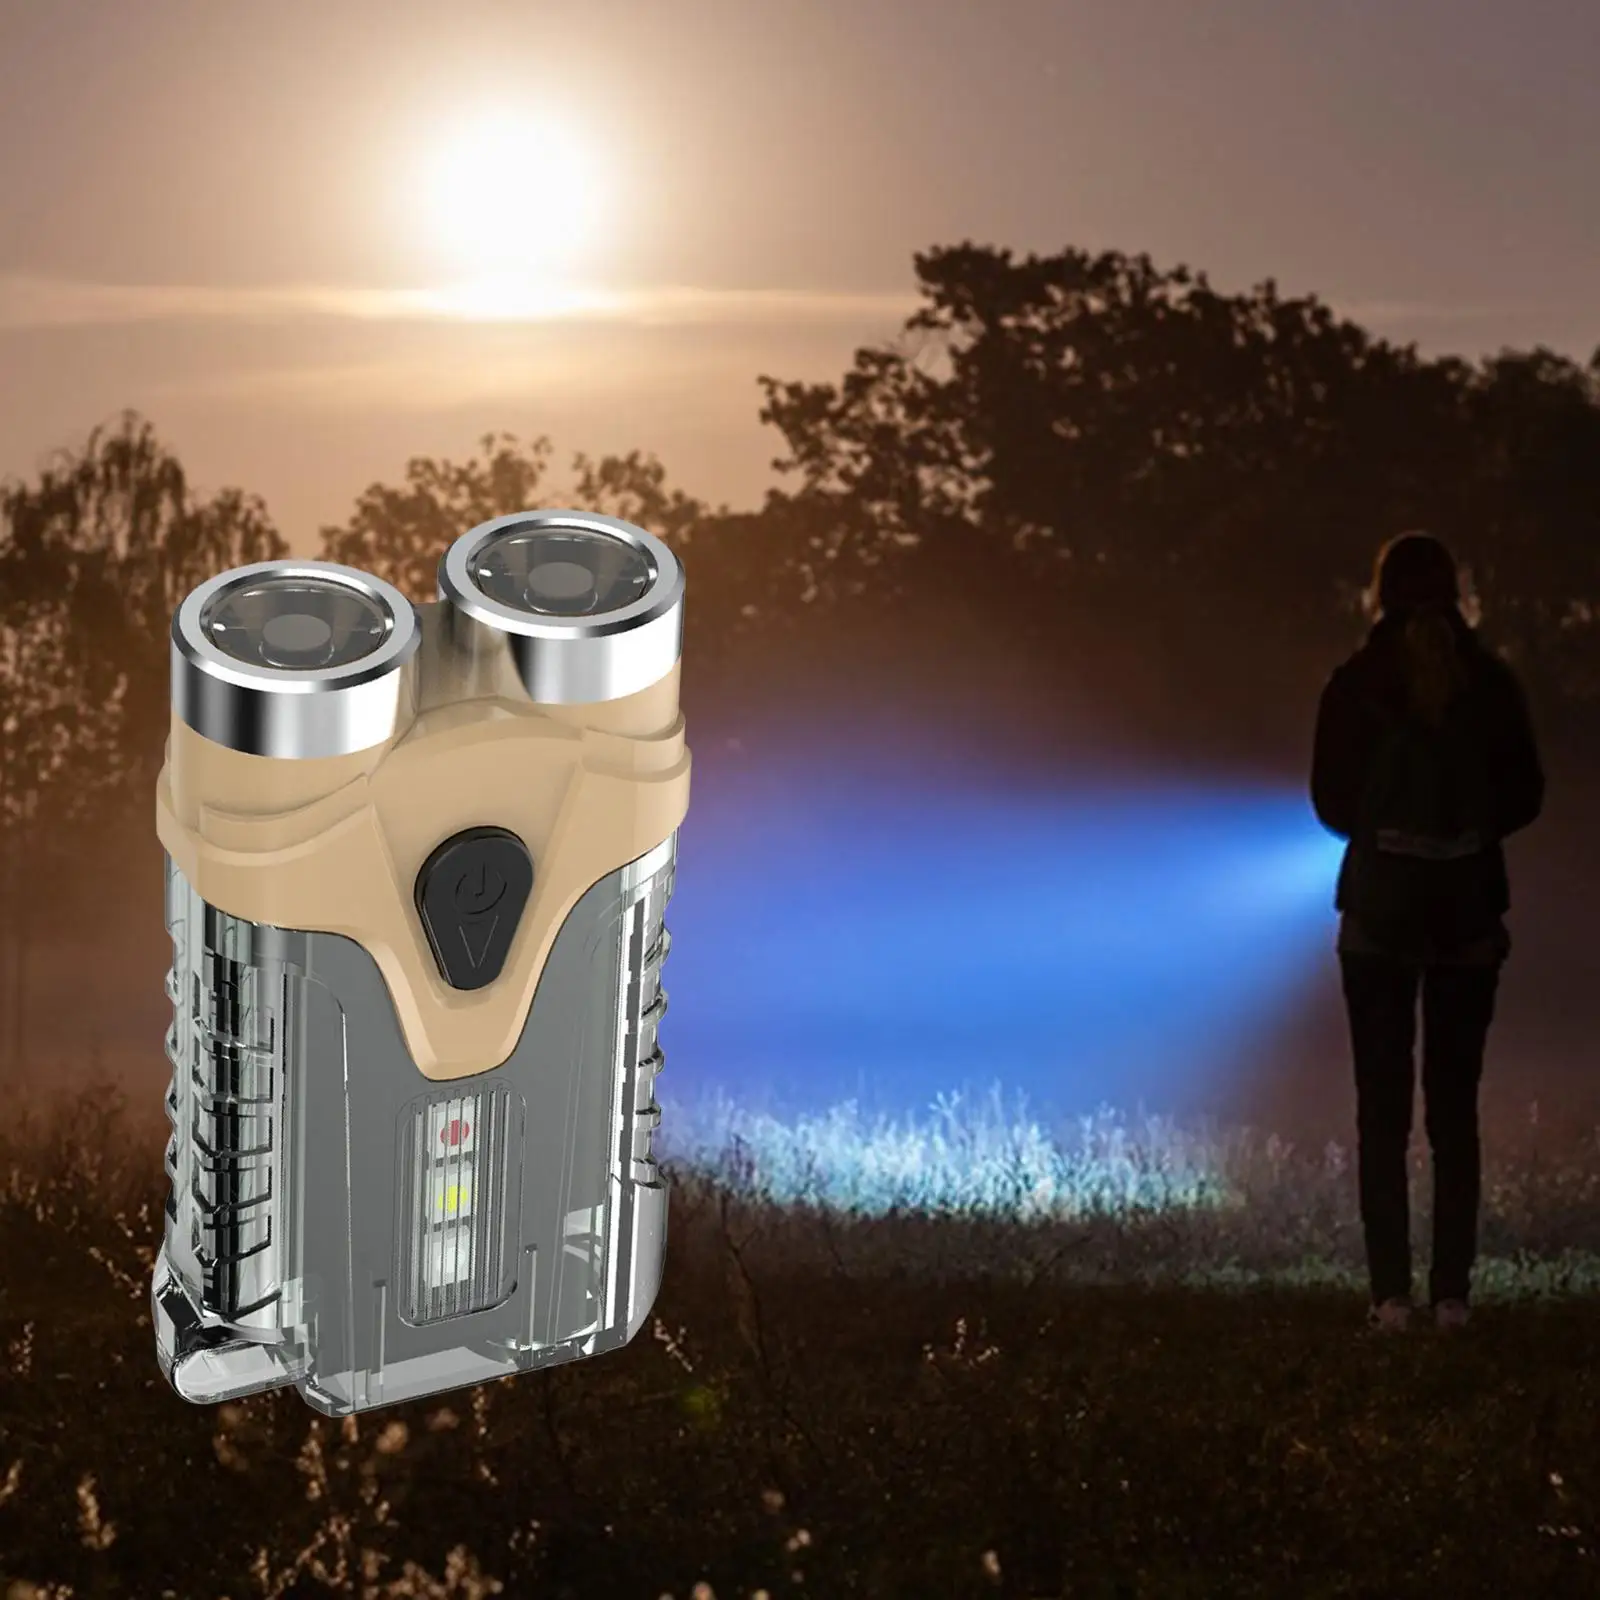 LED Keychain Flashlight Flash Light Torch USB Waterproof Handheld Torch Light for Hiking Camping Fishing Car Garage Outdoor